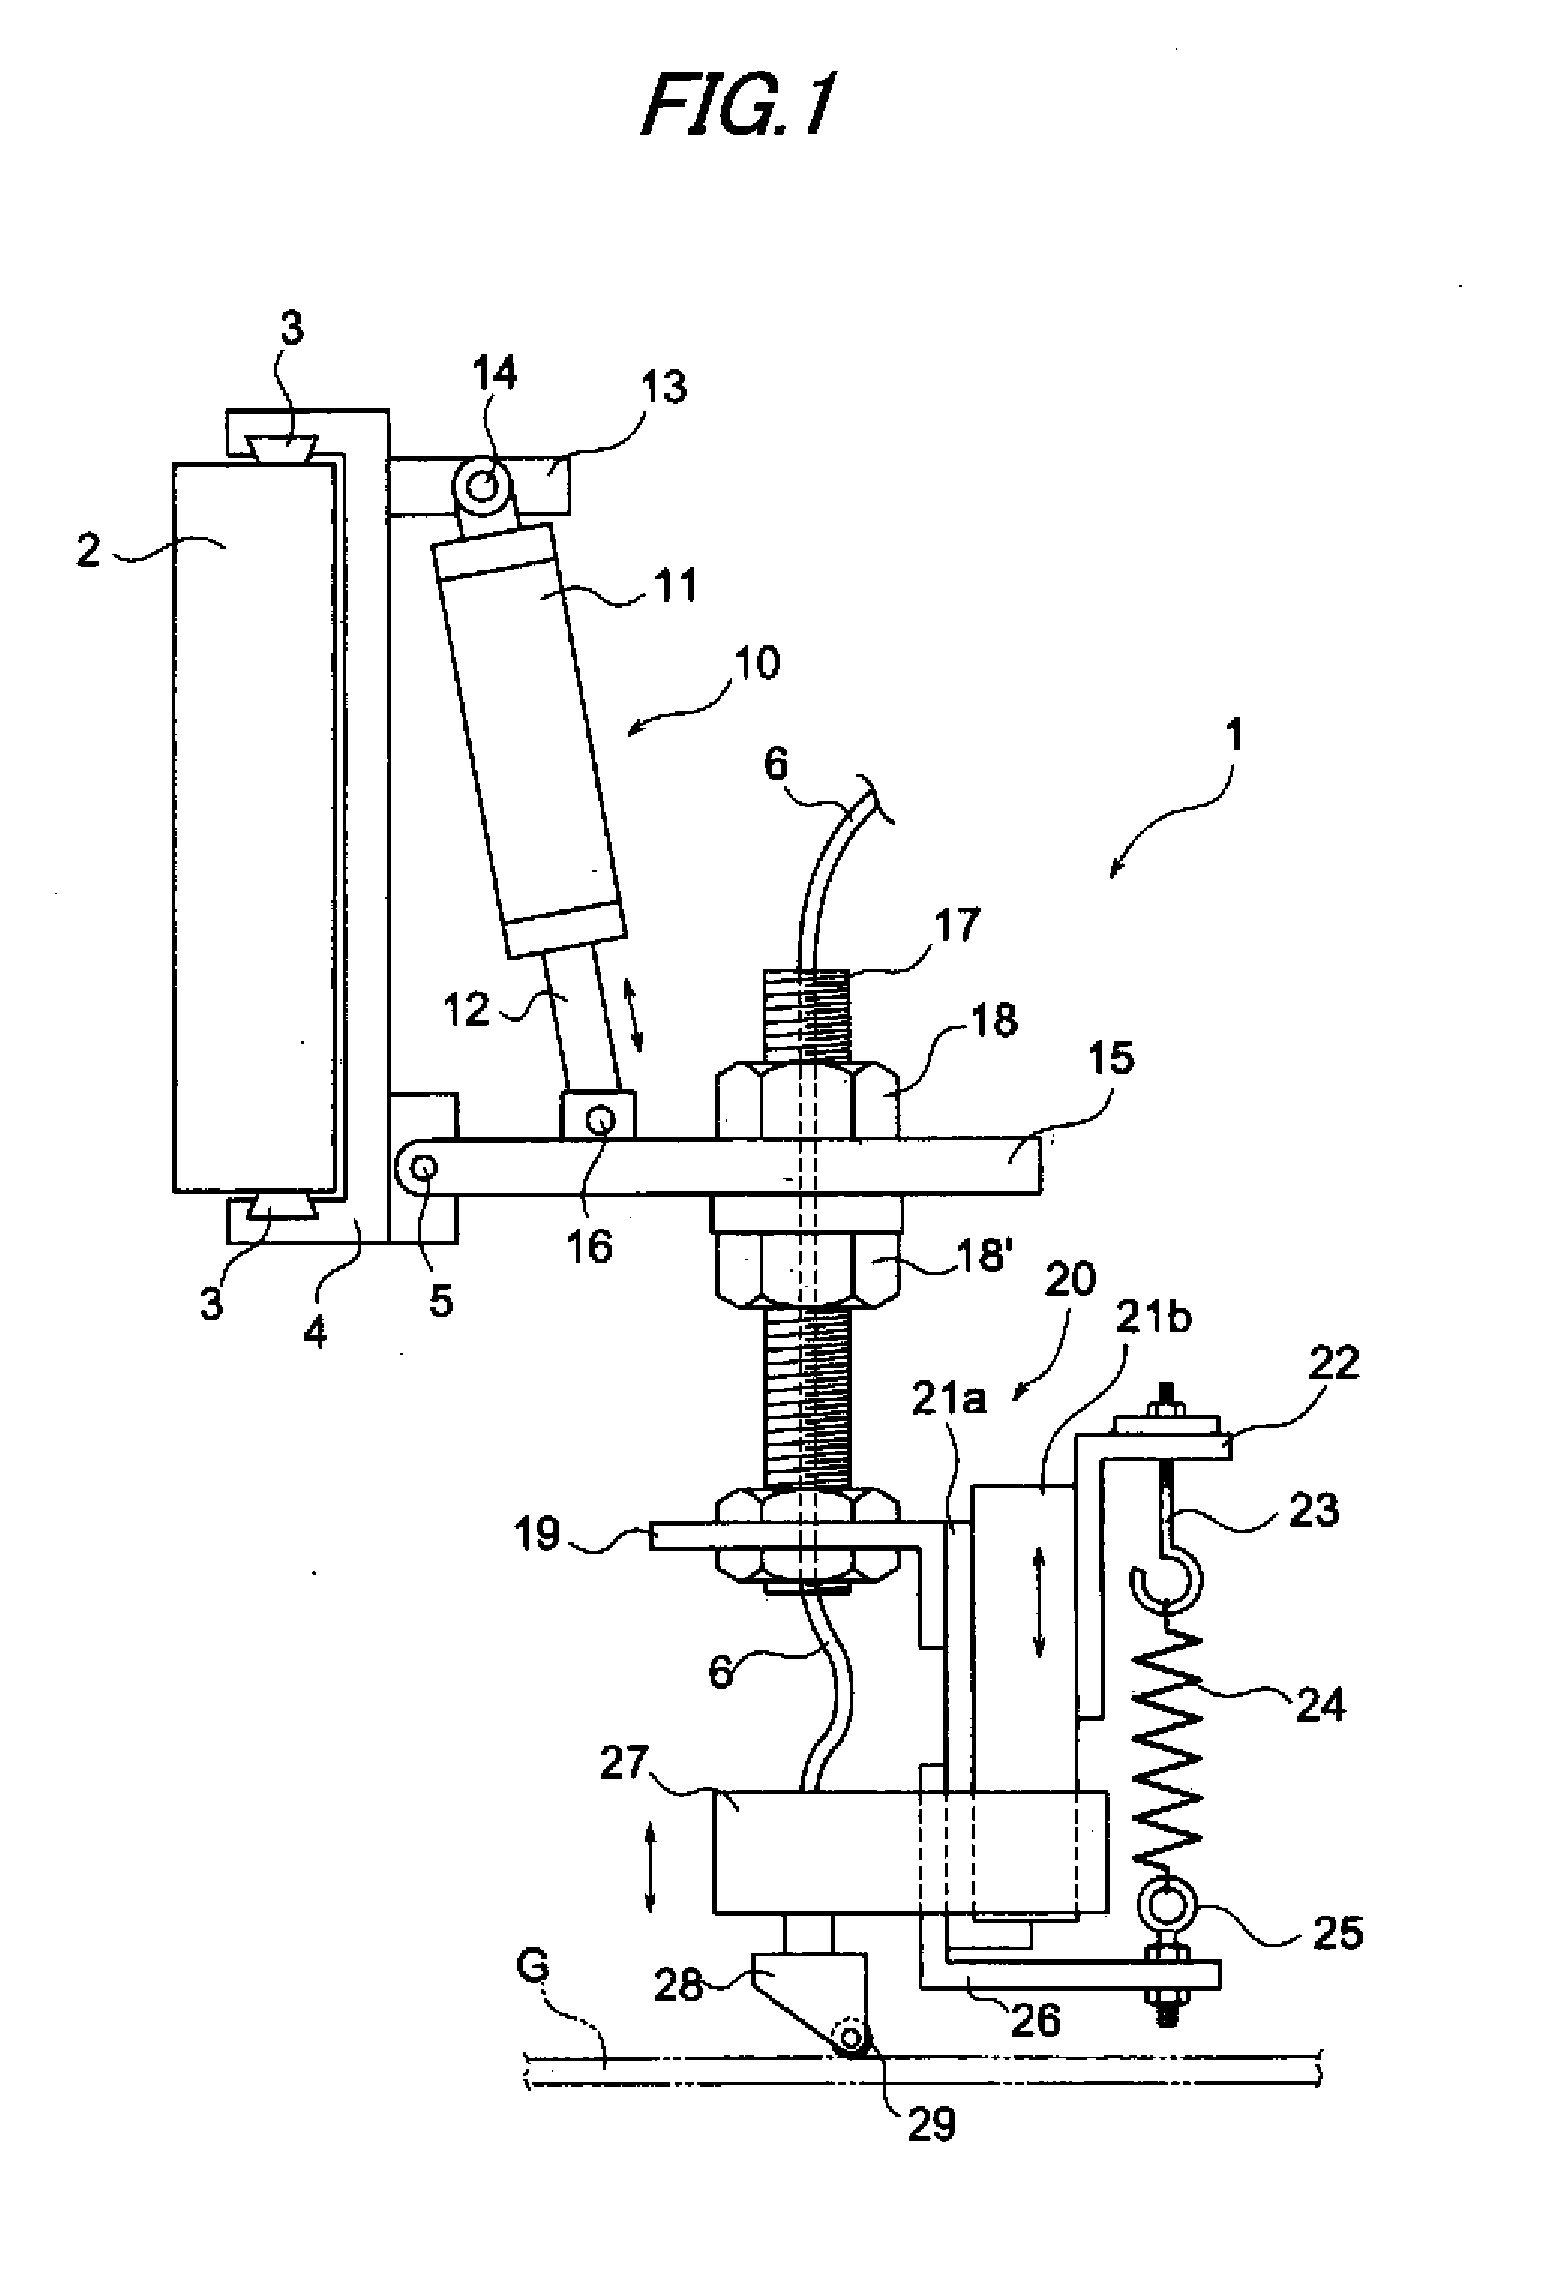 Cutting line on glass sheet providing apparatus